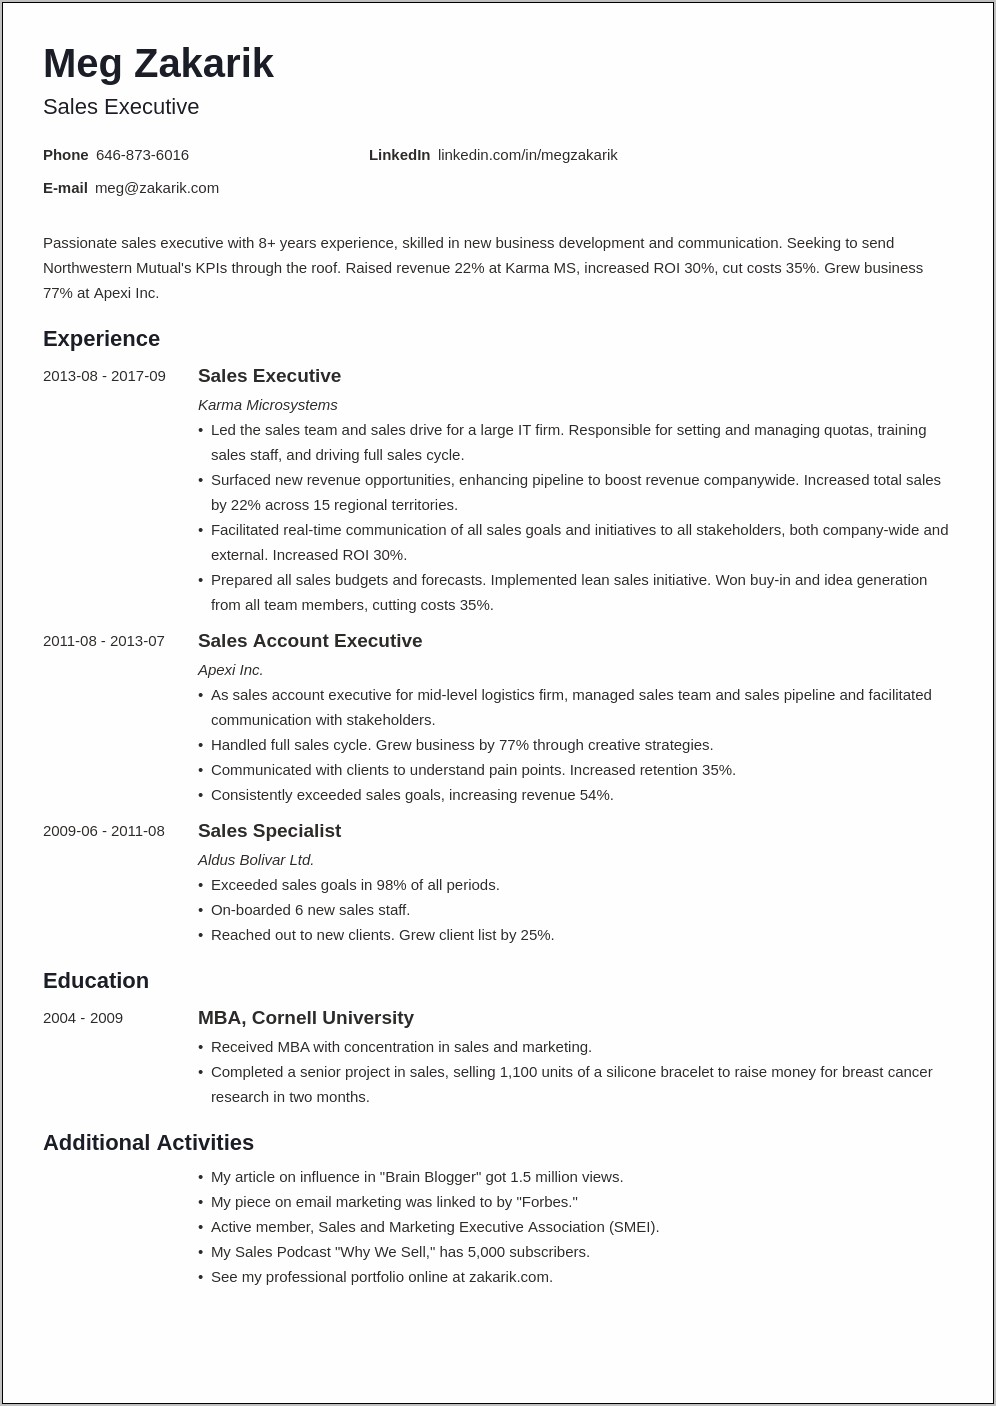 Sample Resume Finance Executive Experience 1 Yr